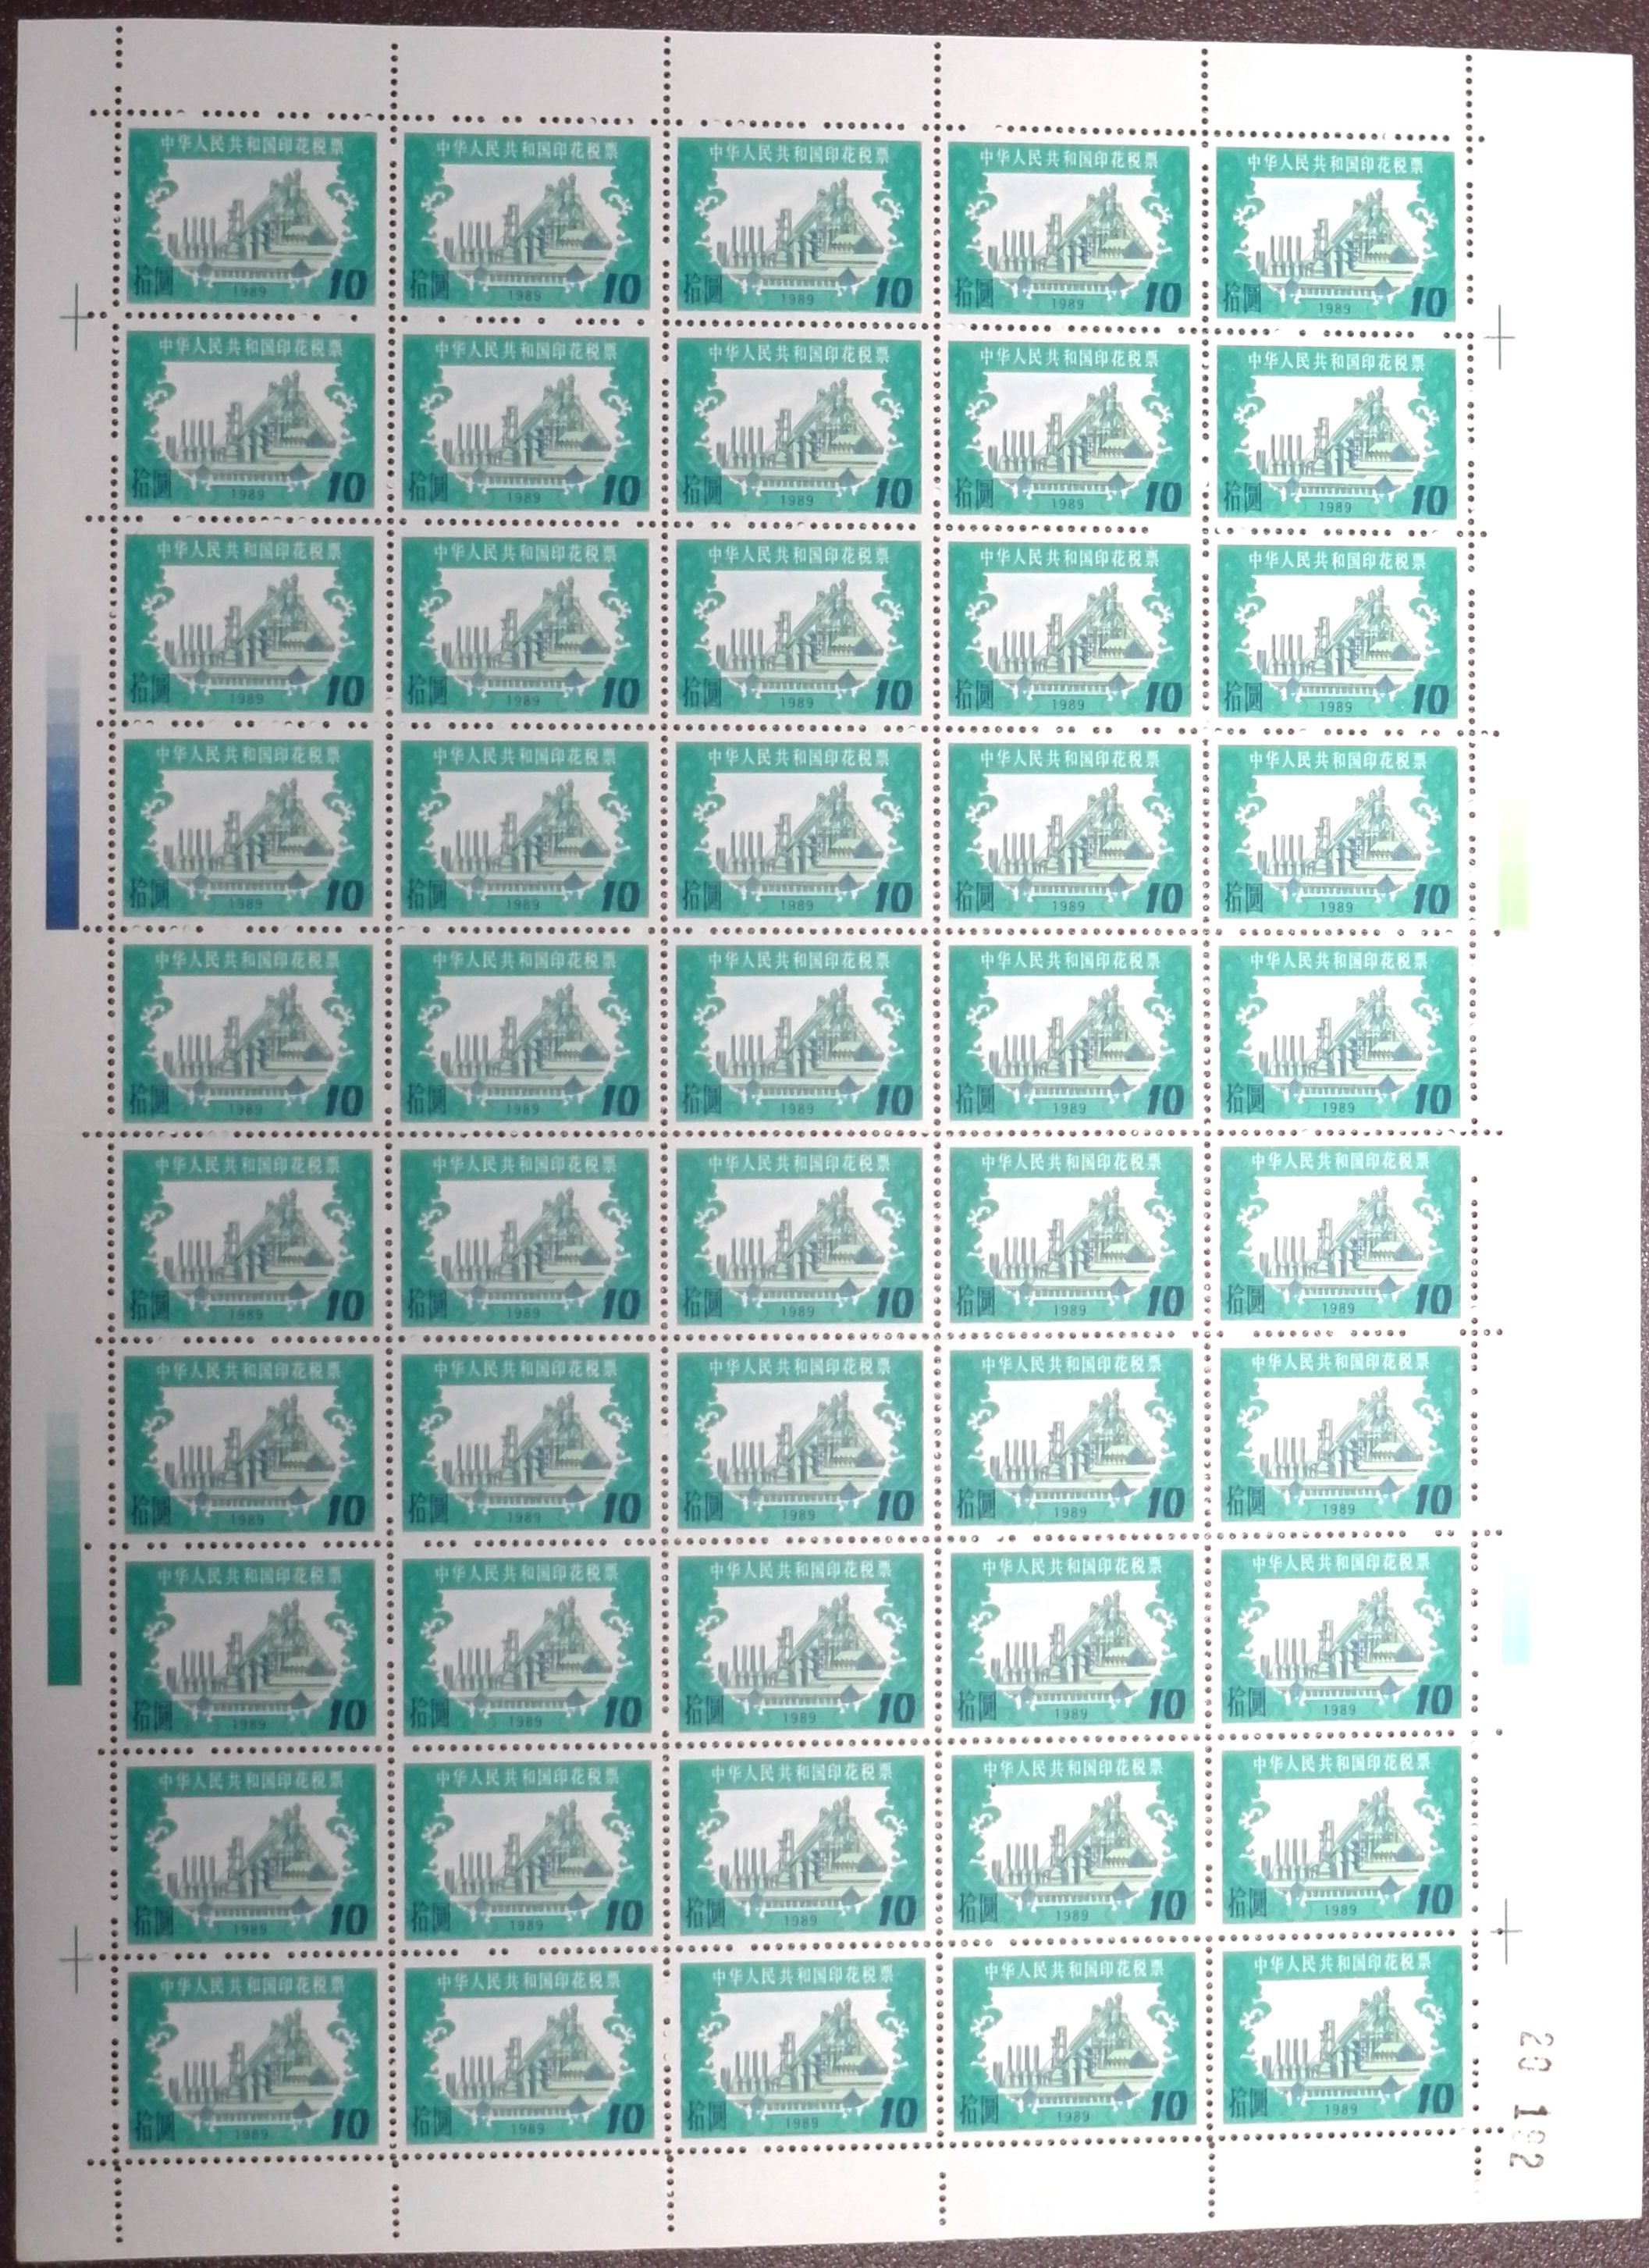 R2282, P.R.China Revenue Stamps, 10 Yuan, Full Sheet 50 pcs, 1989 - Click Image to Close